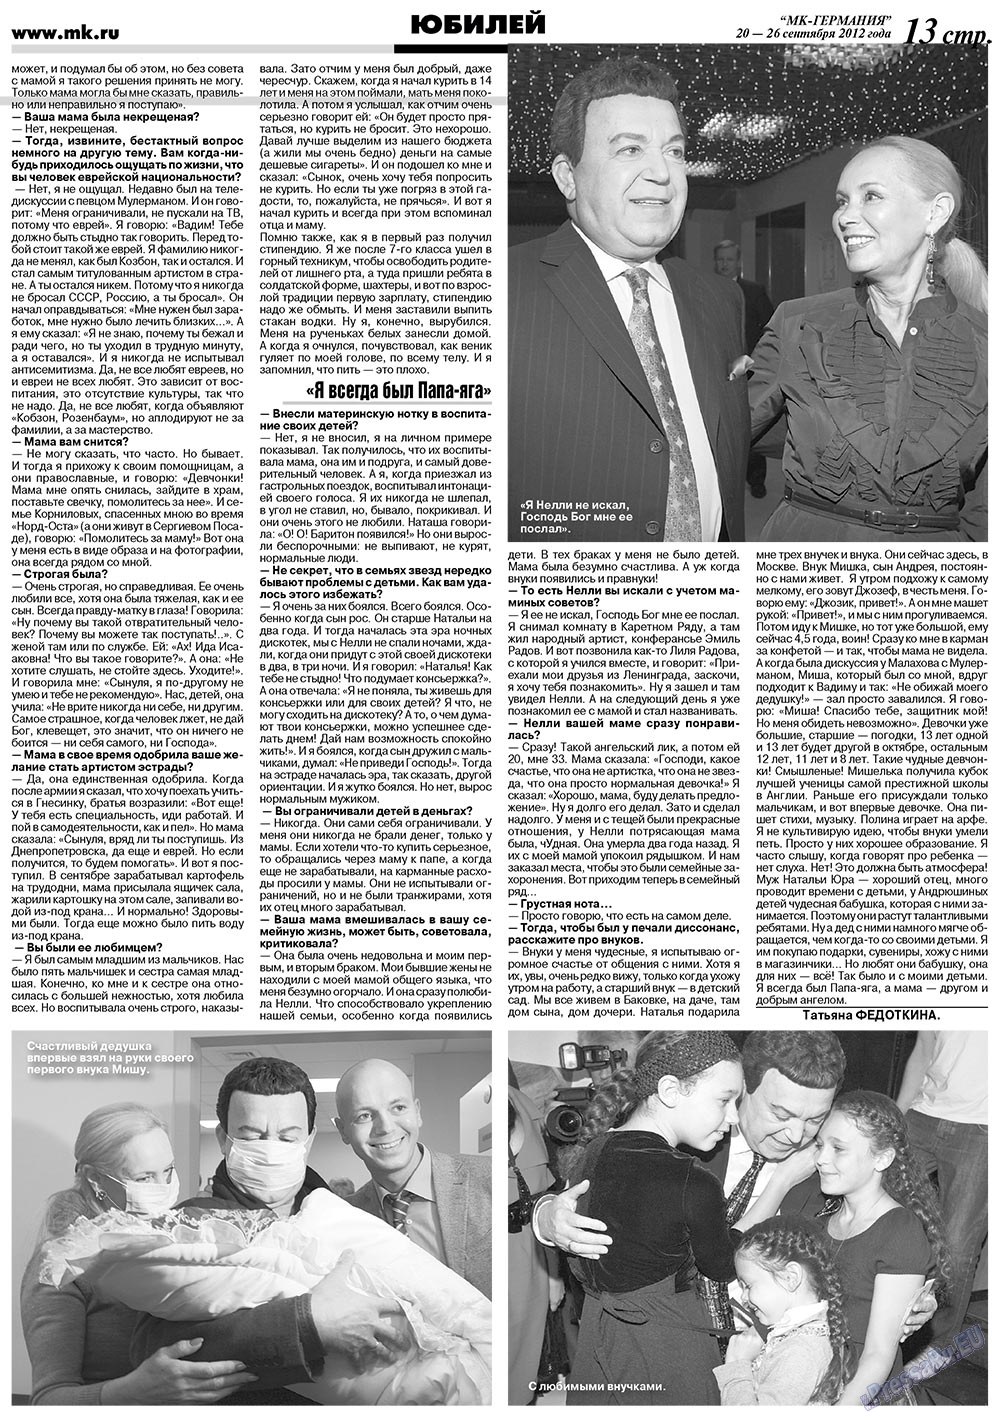 МК-Германия, газета. 2012 №38 стр.13